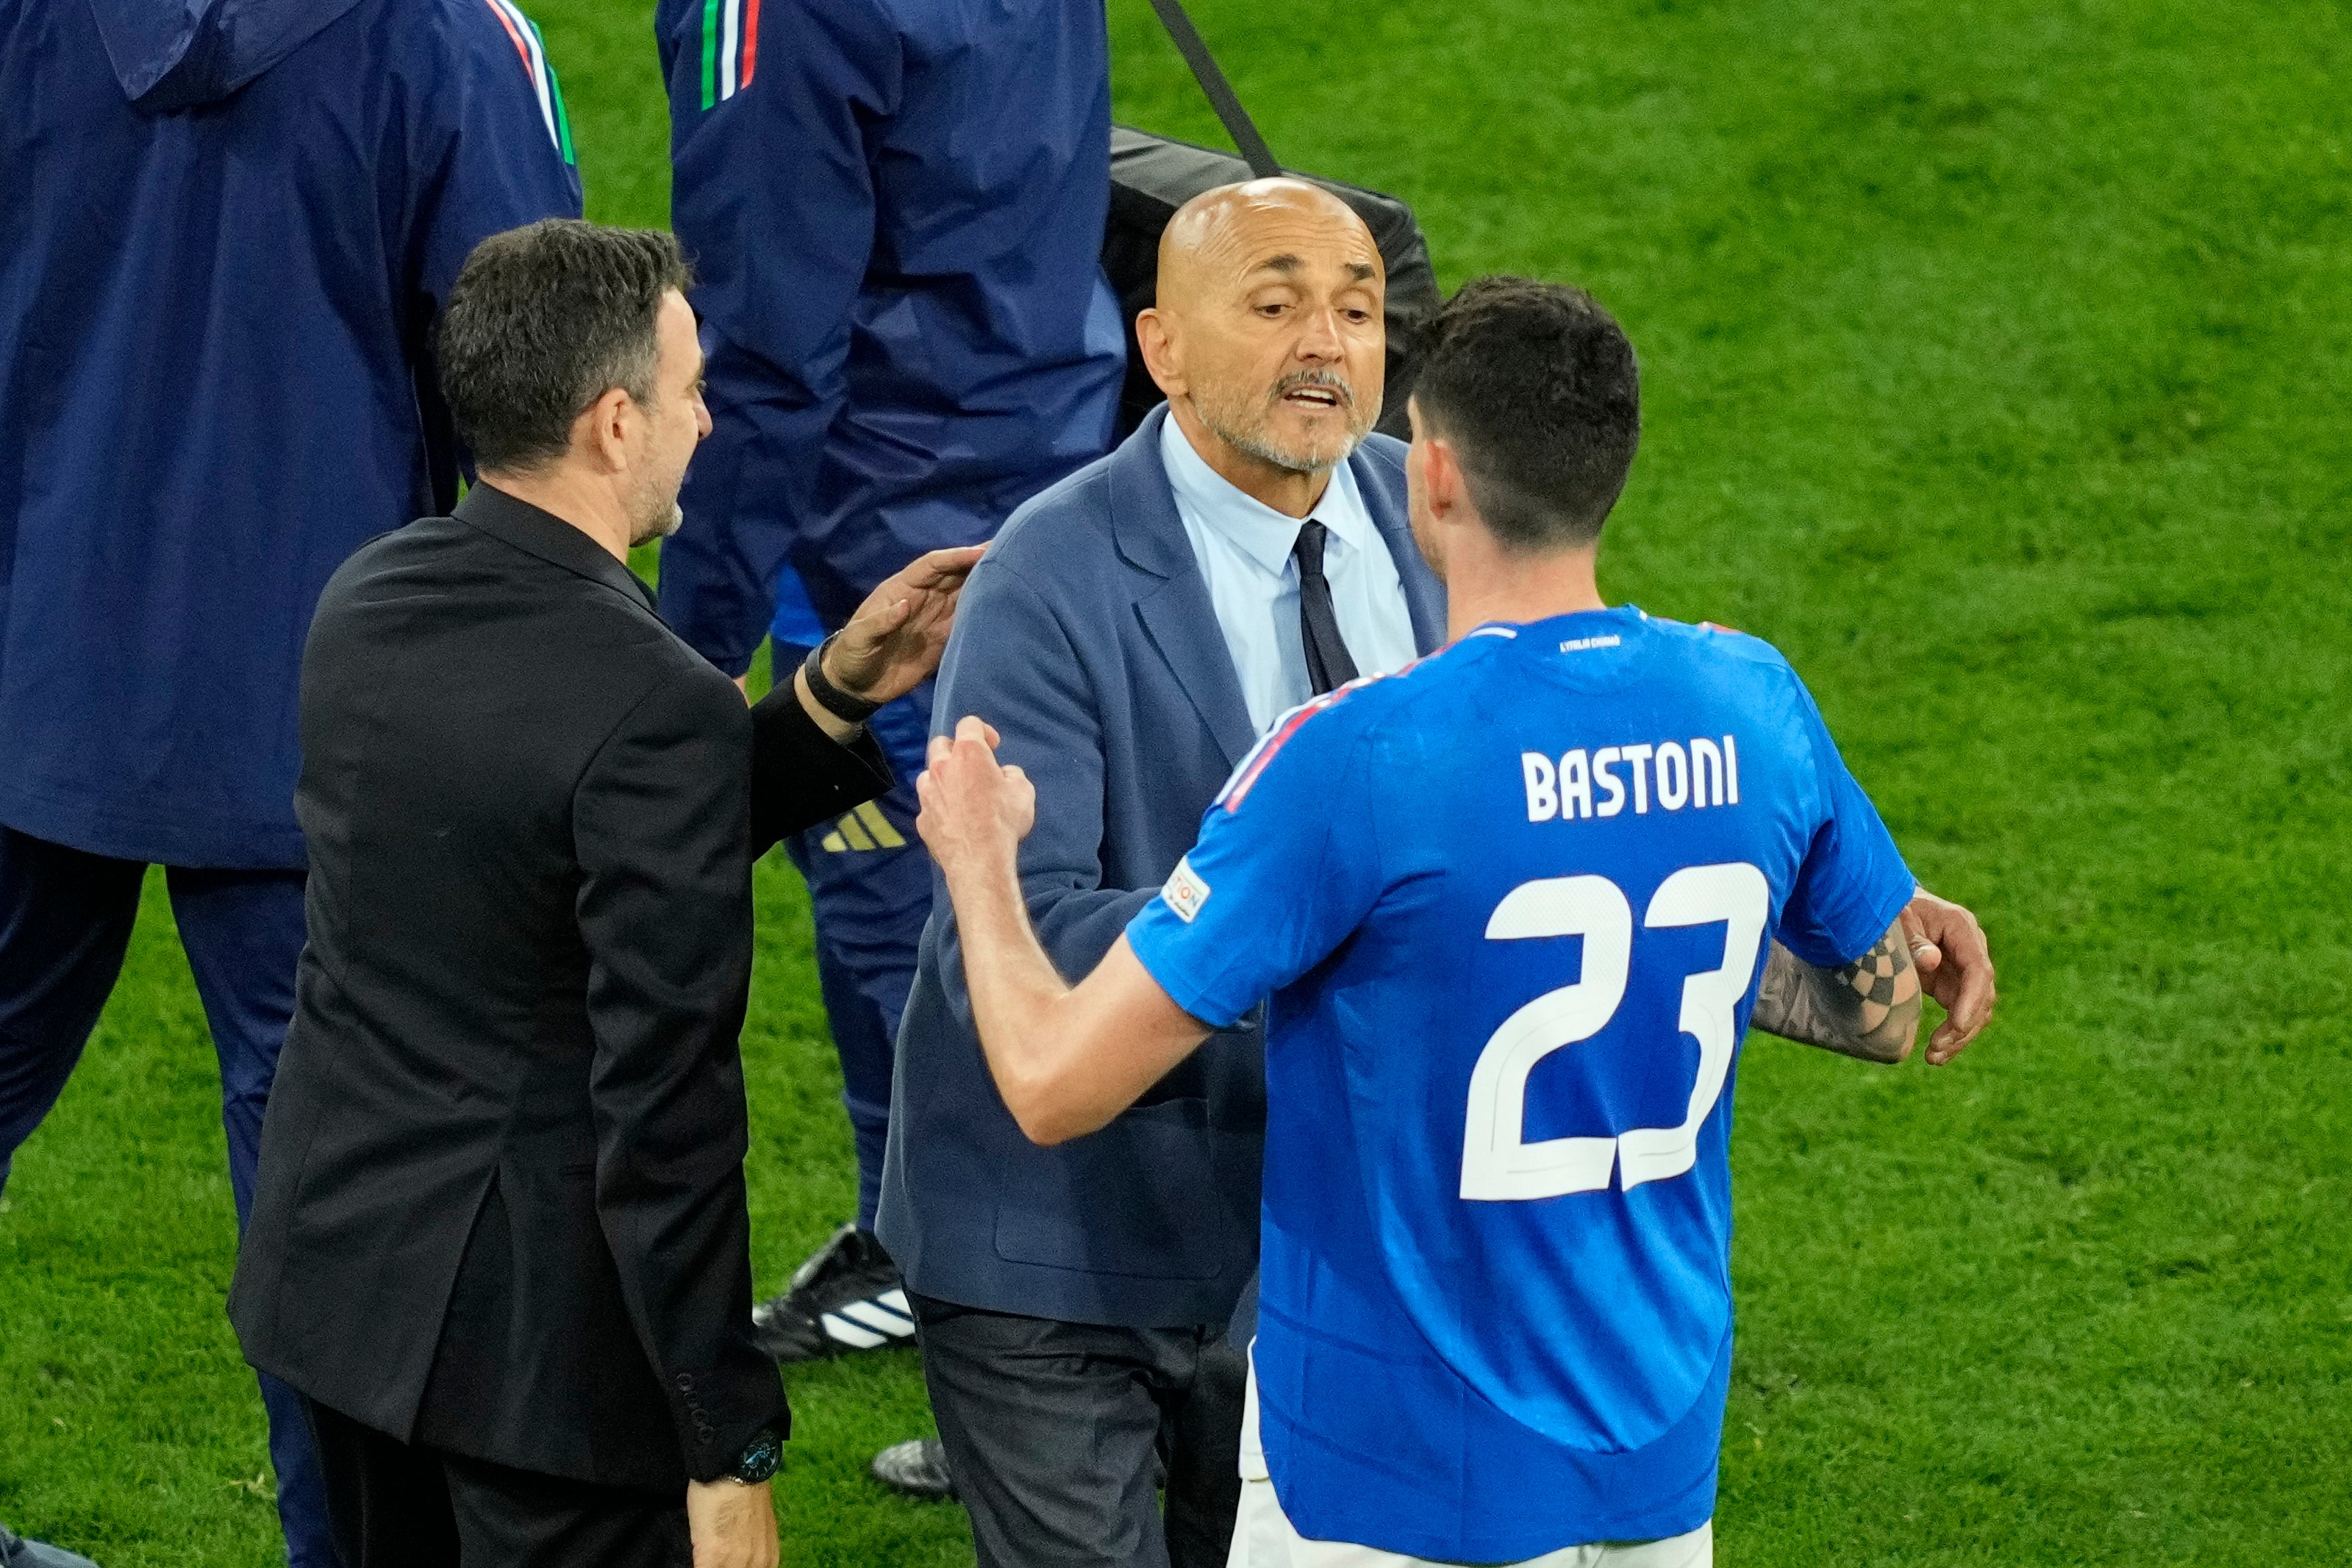 Italy's head coach Spalletti shakes hands with Bastoni